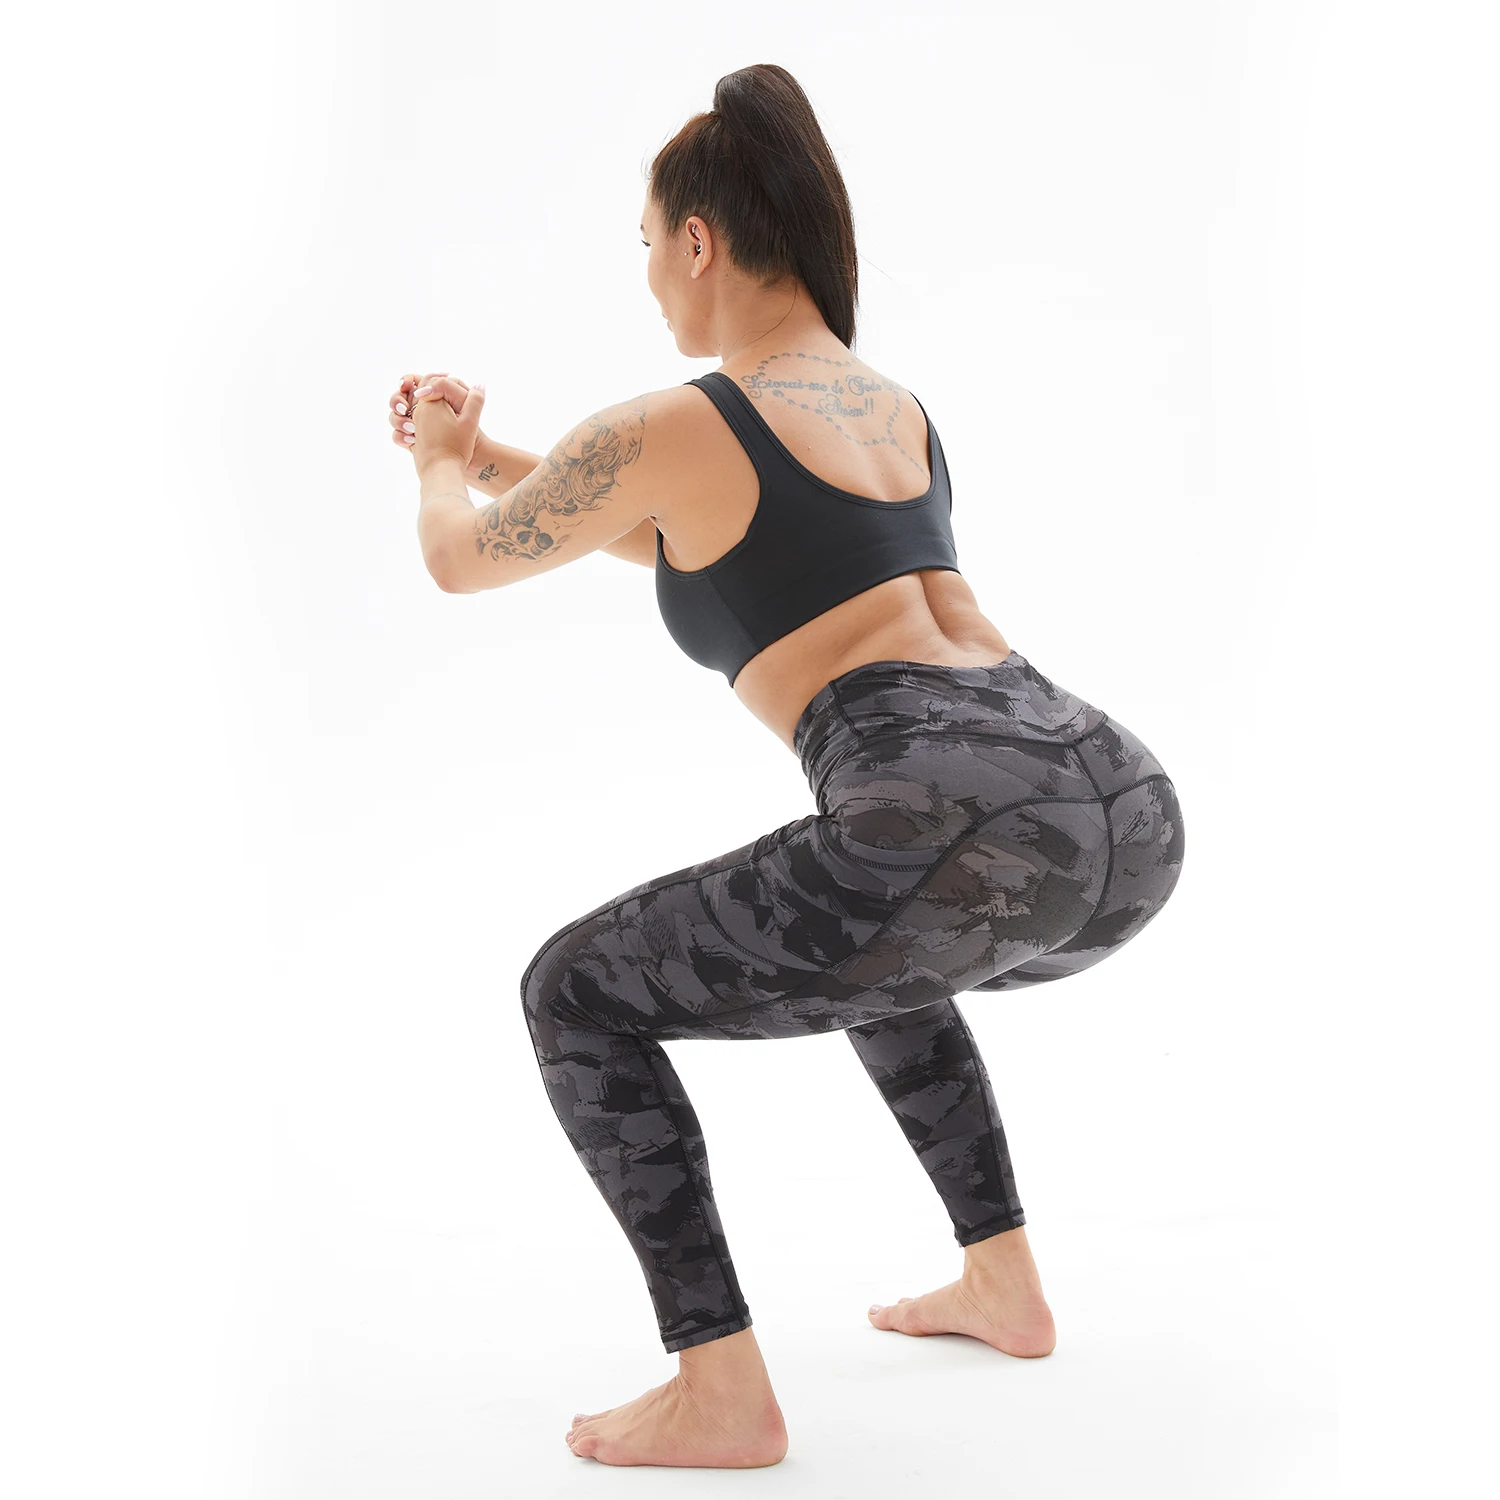 High waist tummy control custom logo buttery soft camo printed 7/8 gym yoga leggings for women yoga pants with pocket